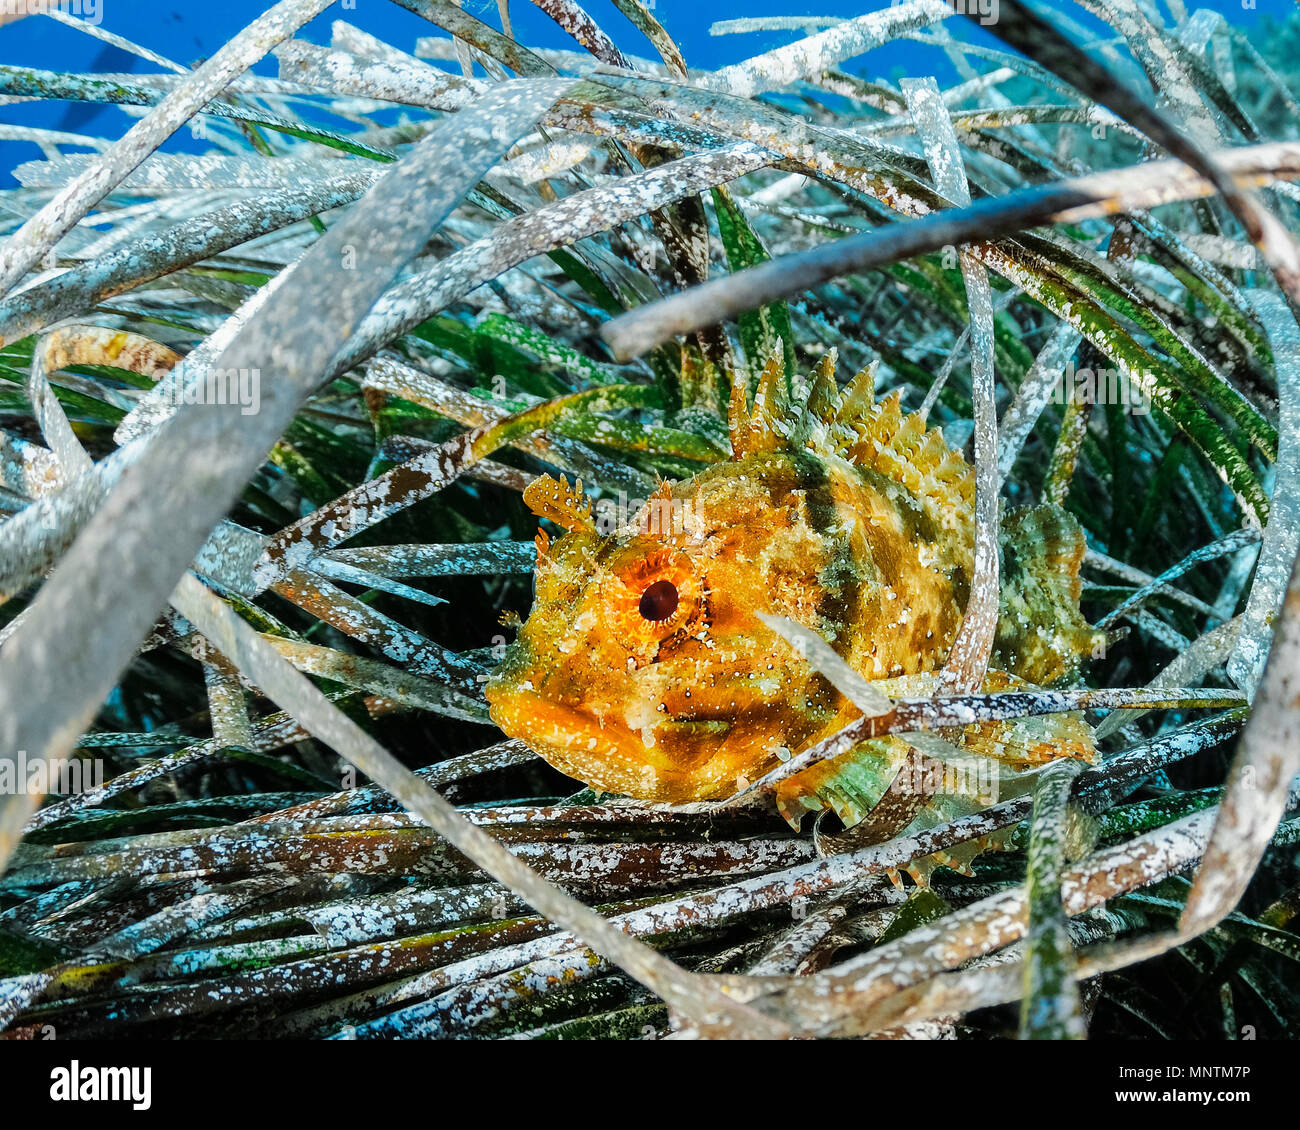 black scorpionfish, Scorpaena porcus, hiding in seagrass, Xwejni Bay, Gozo, Malta, Mediterranean Sea, Atlantic Ocean Stock Photo